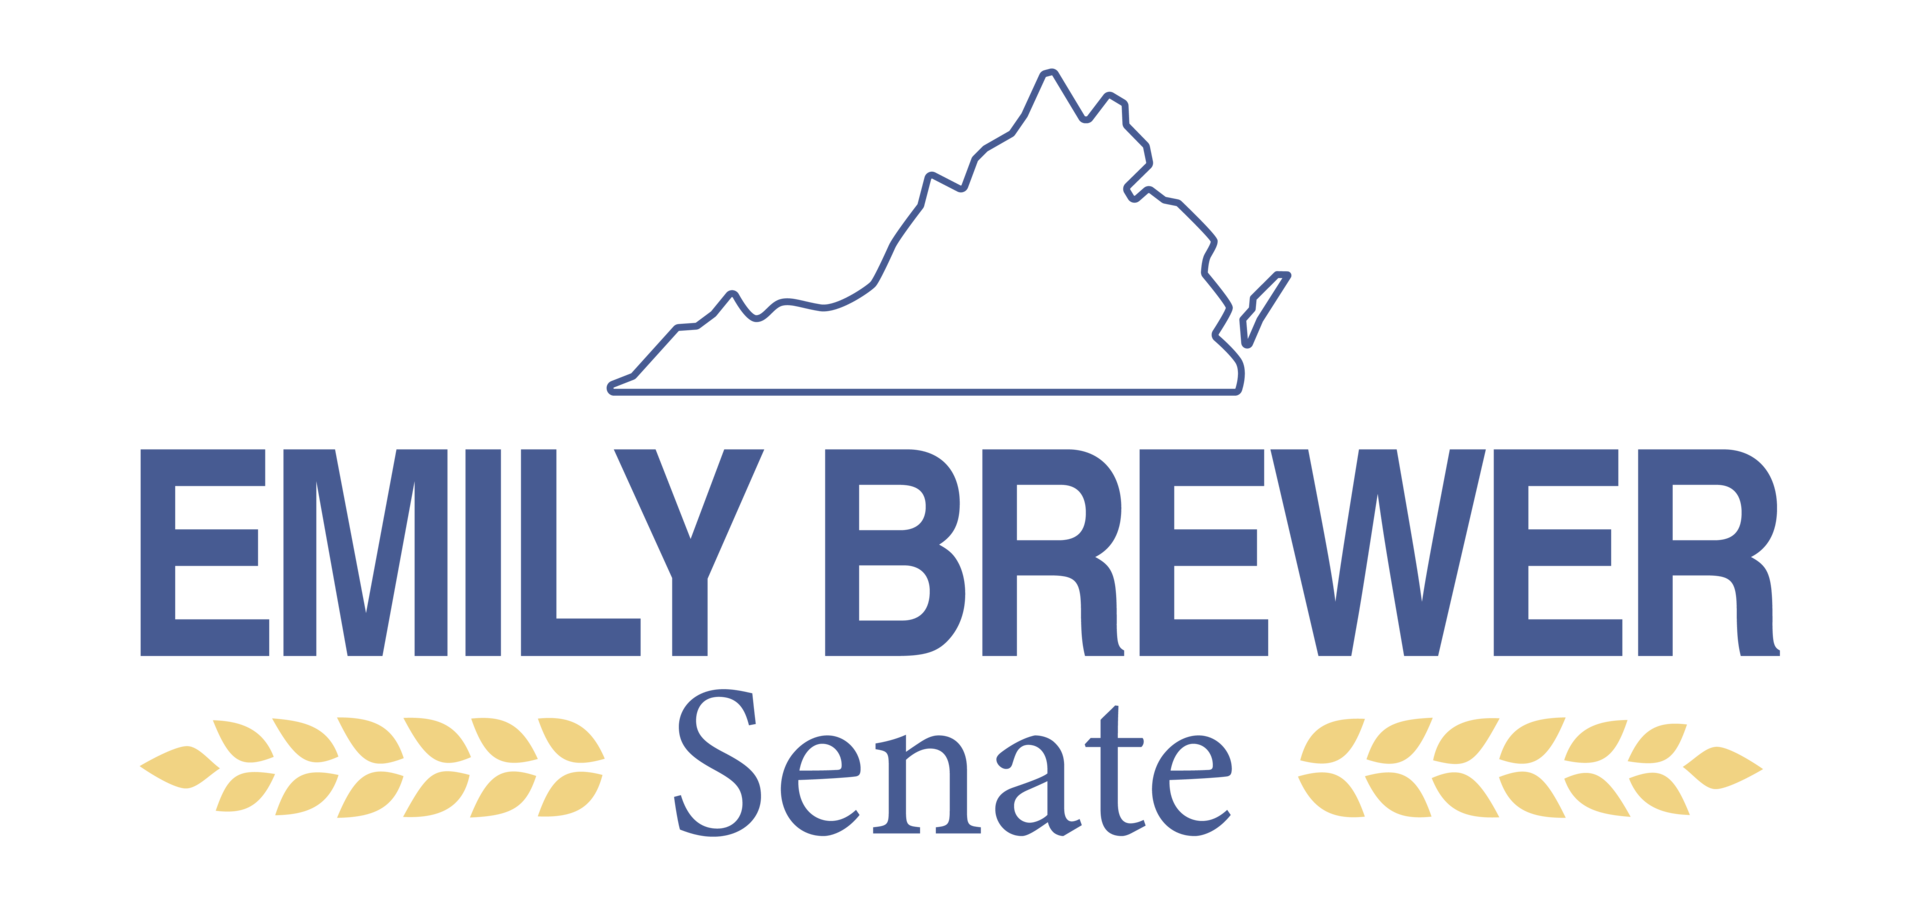 Brewer emily logo